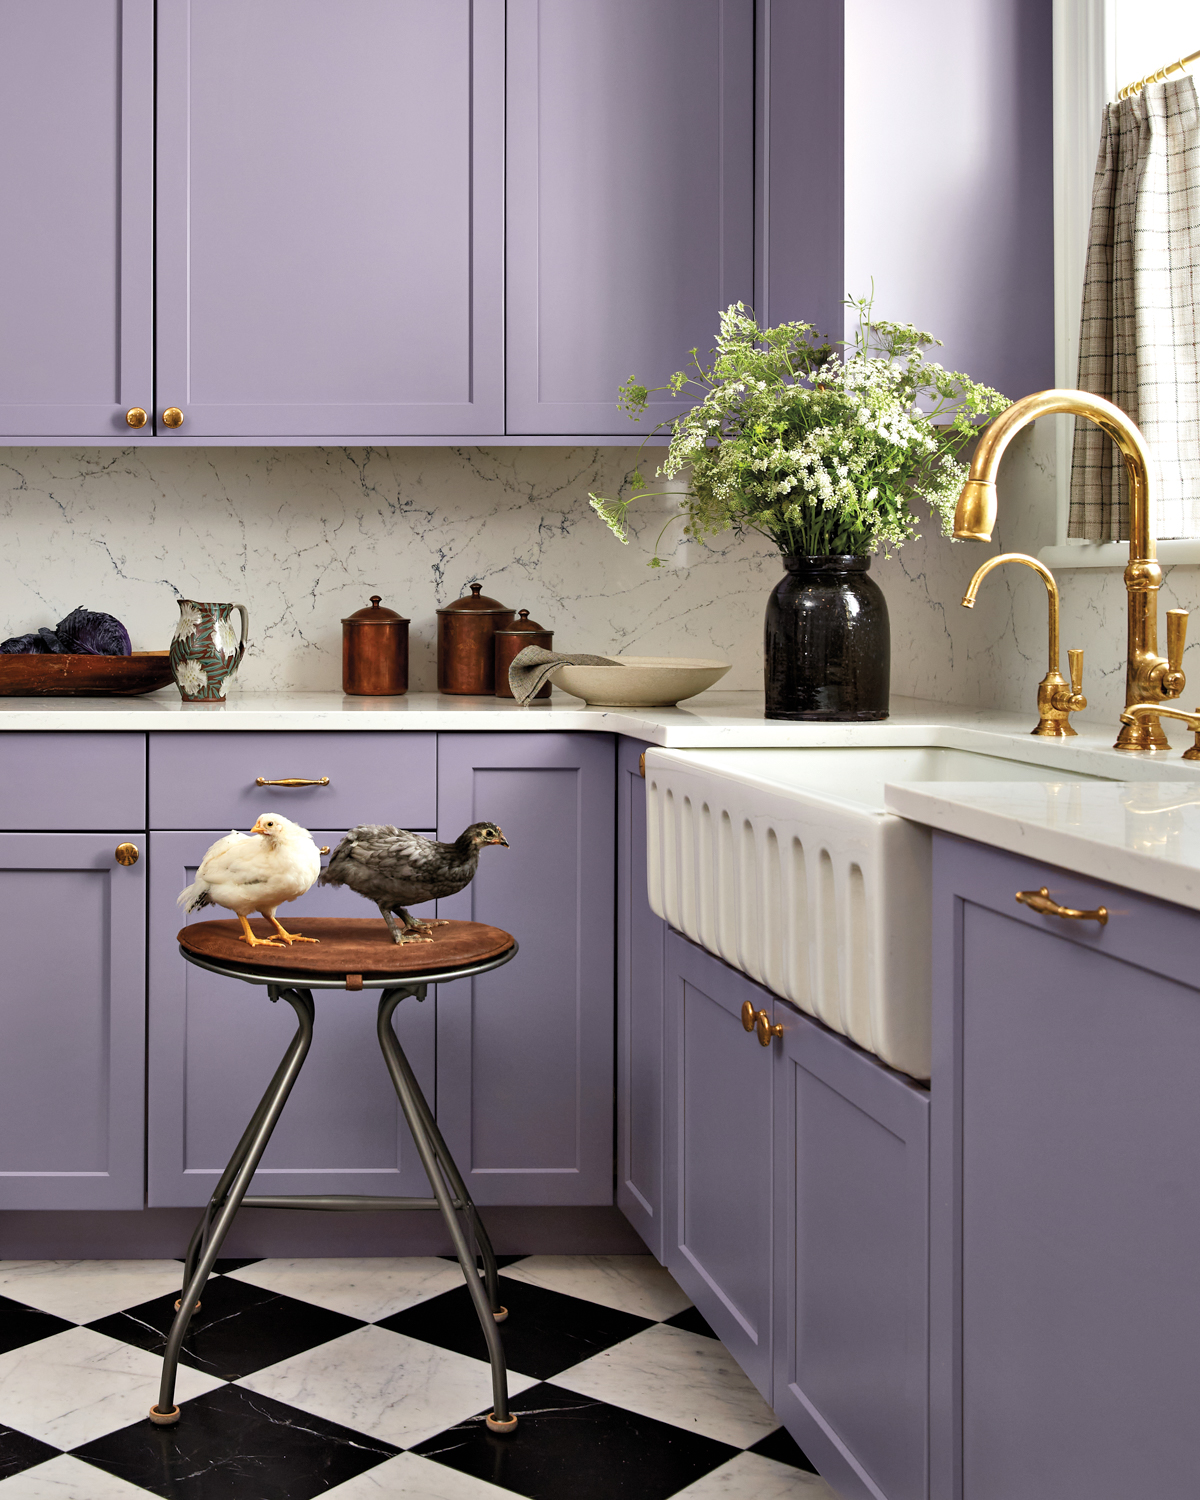 purple themed kitchen by Michelle Gage